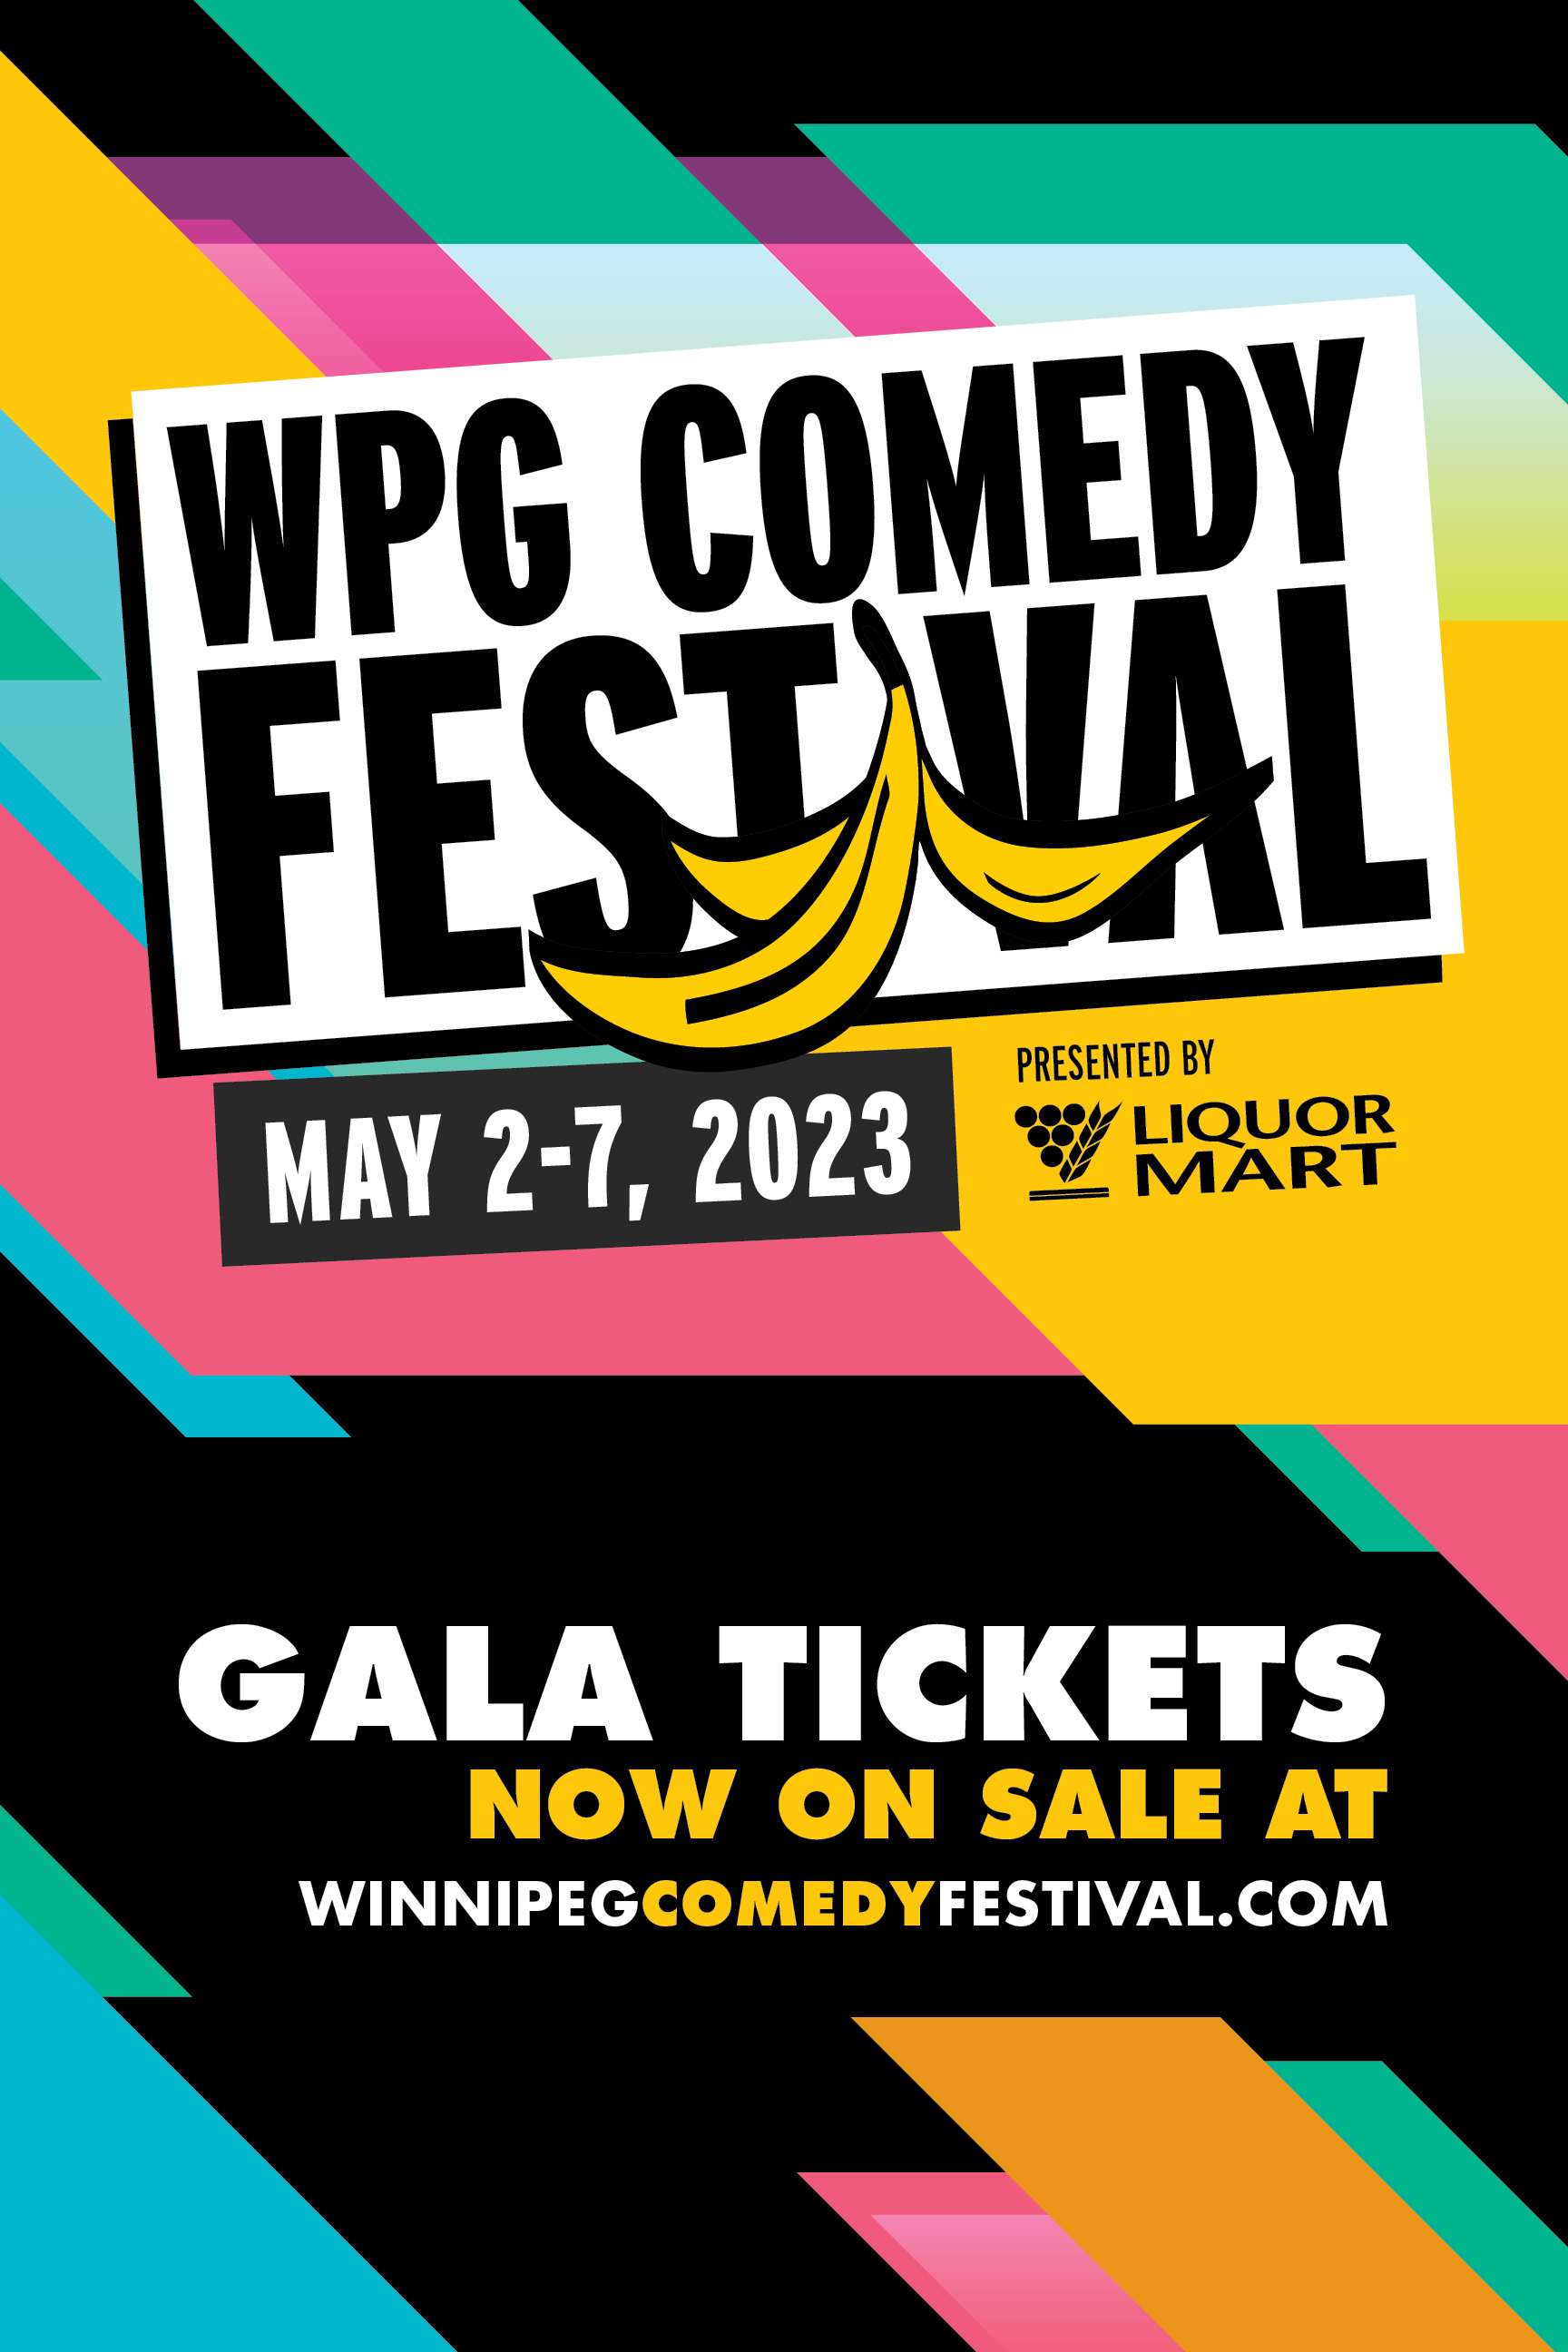 The 22nd Annual Winnipeg Comedy Festival